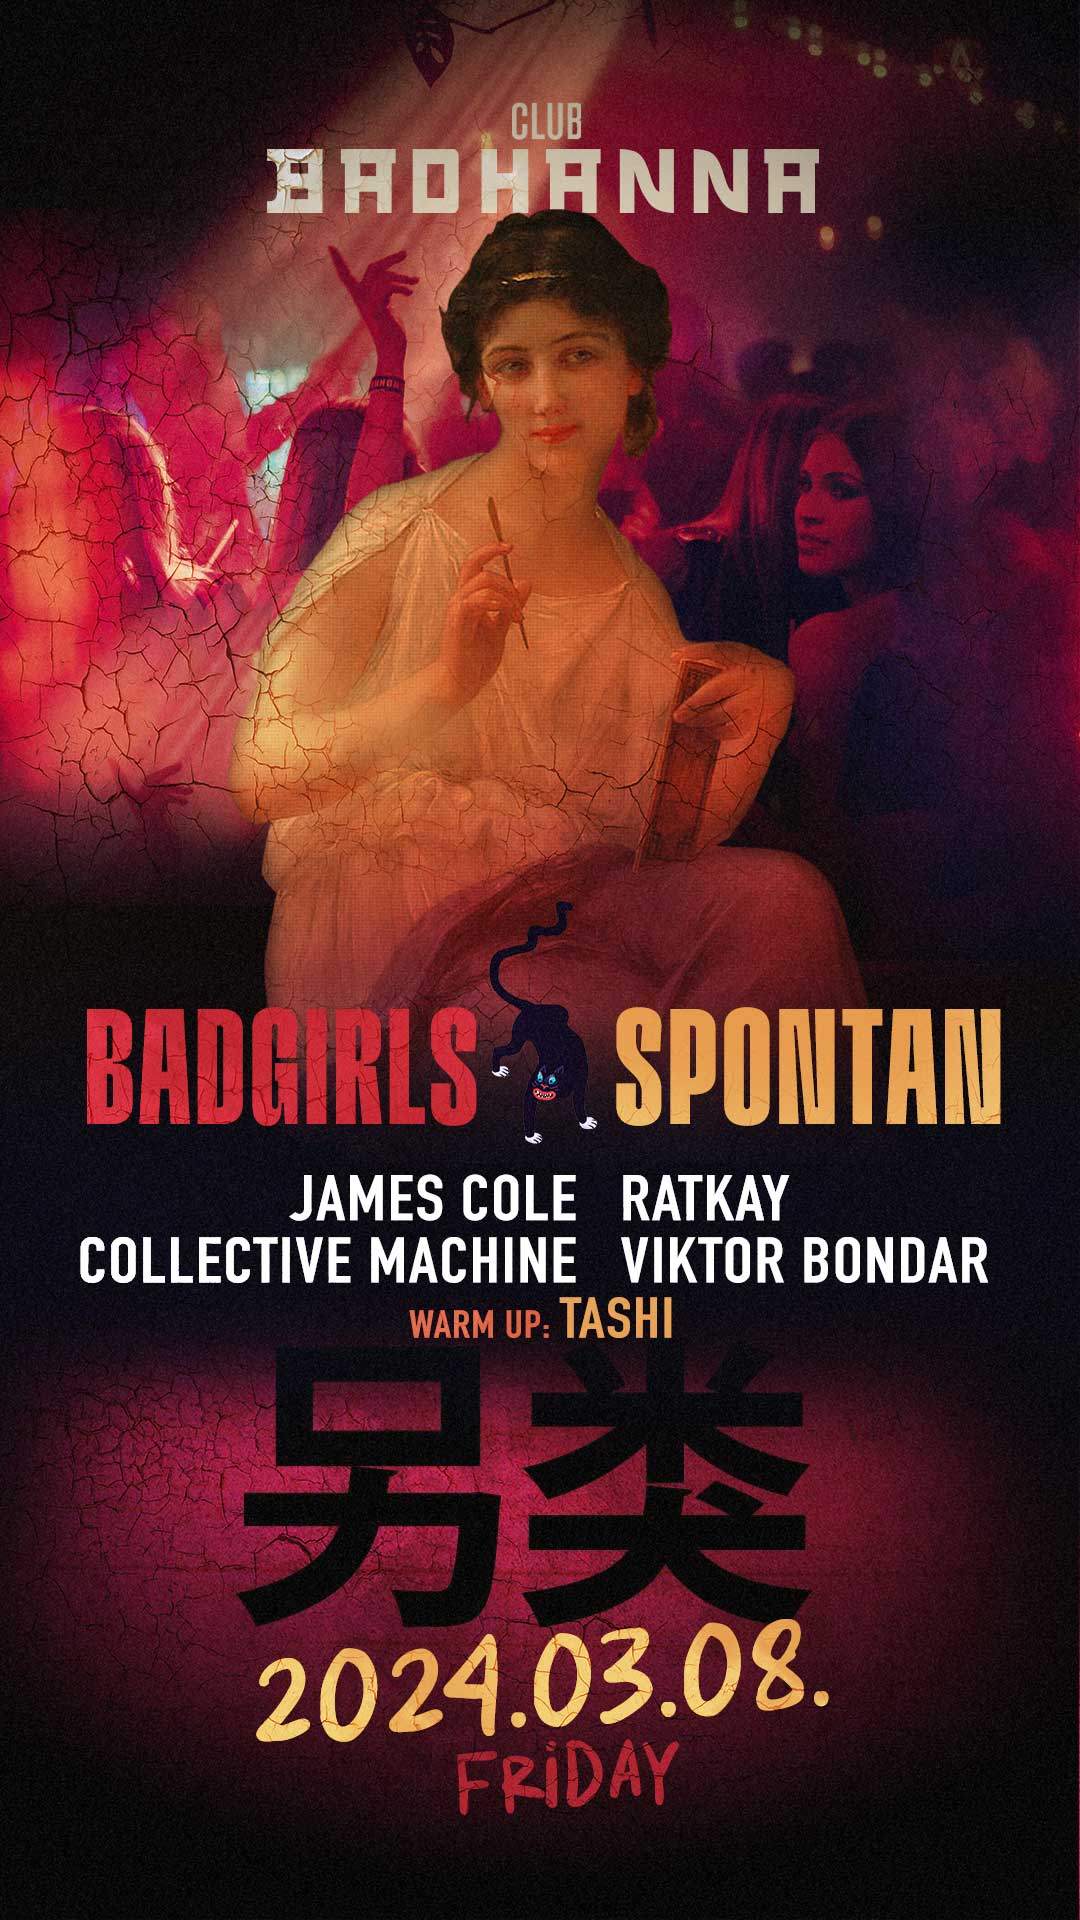 Badgirls vs SPONTAN Club BADHANNA Women's day Edition - Página trasera